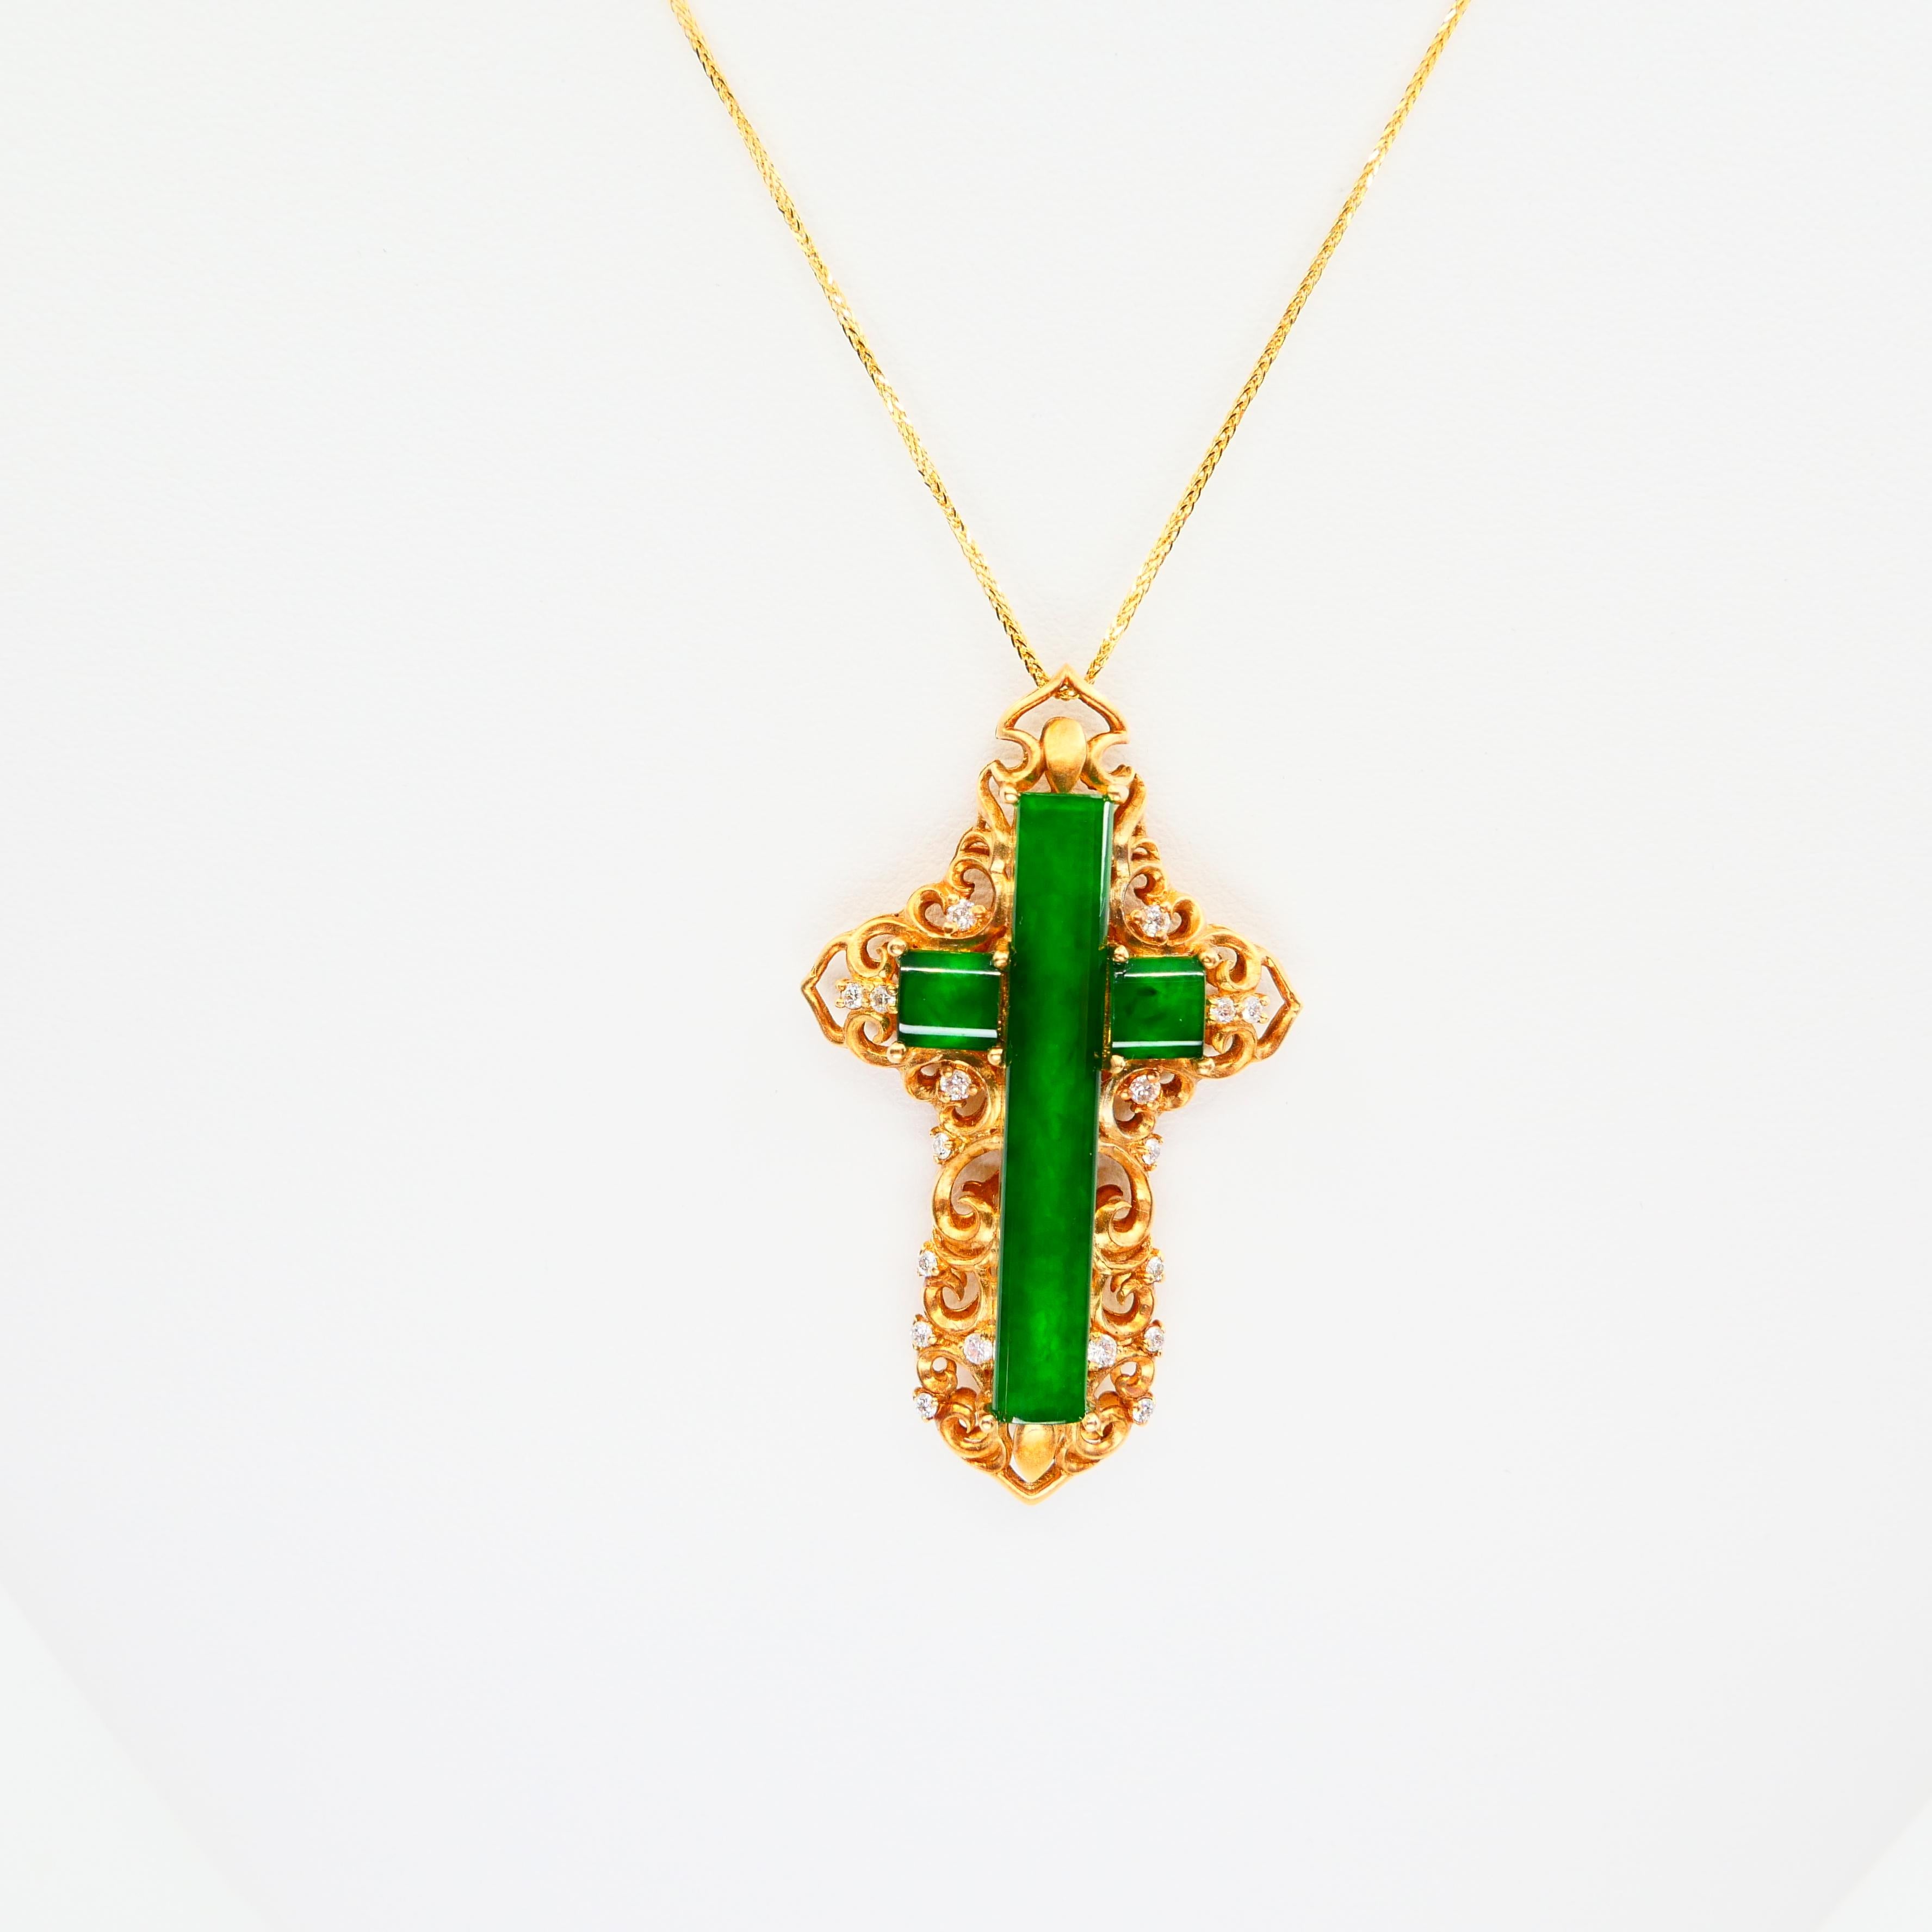 Certified Type A Jade Diamond Cross Pendant Drop Necklace, Intense Vivid Green 1